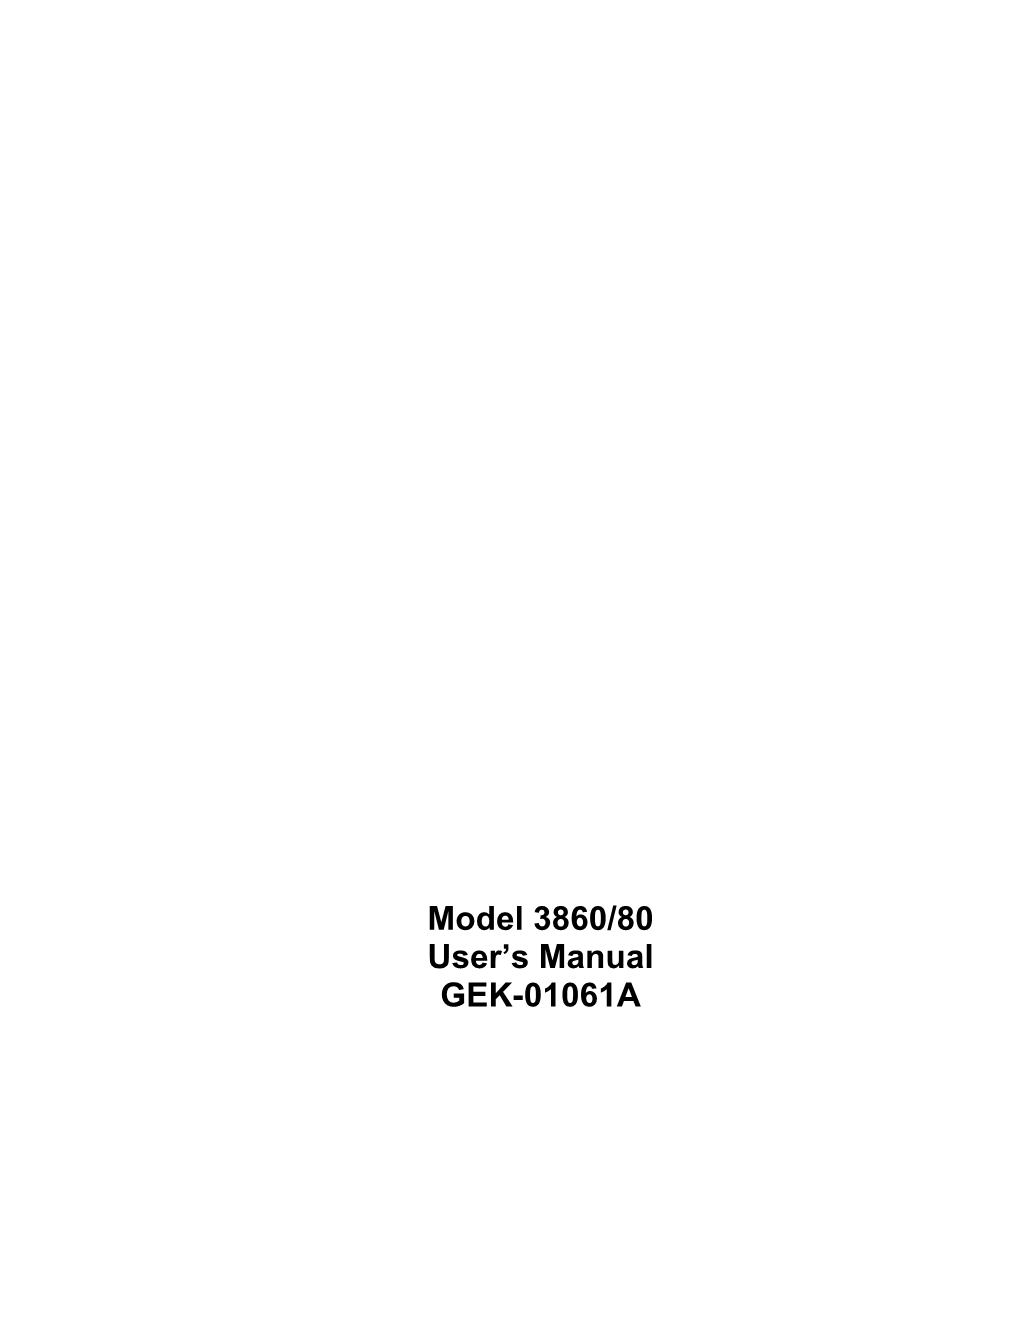 Model 3860/80 User's Manual GEK-01061A